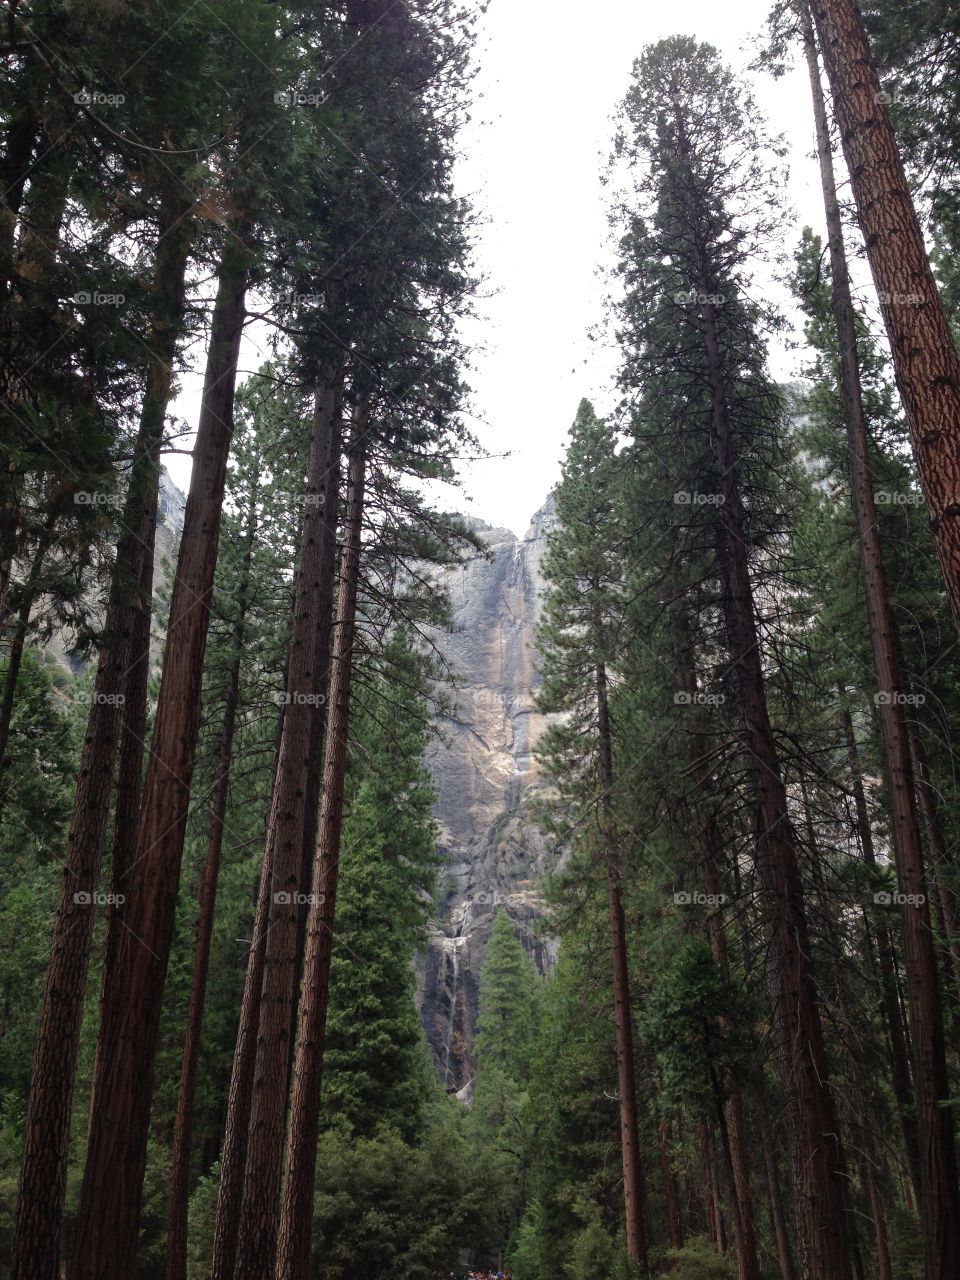 Yosemite forest